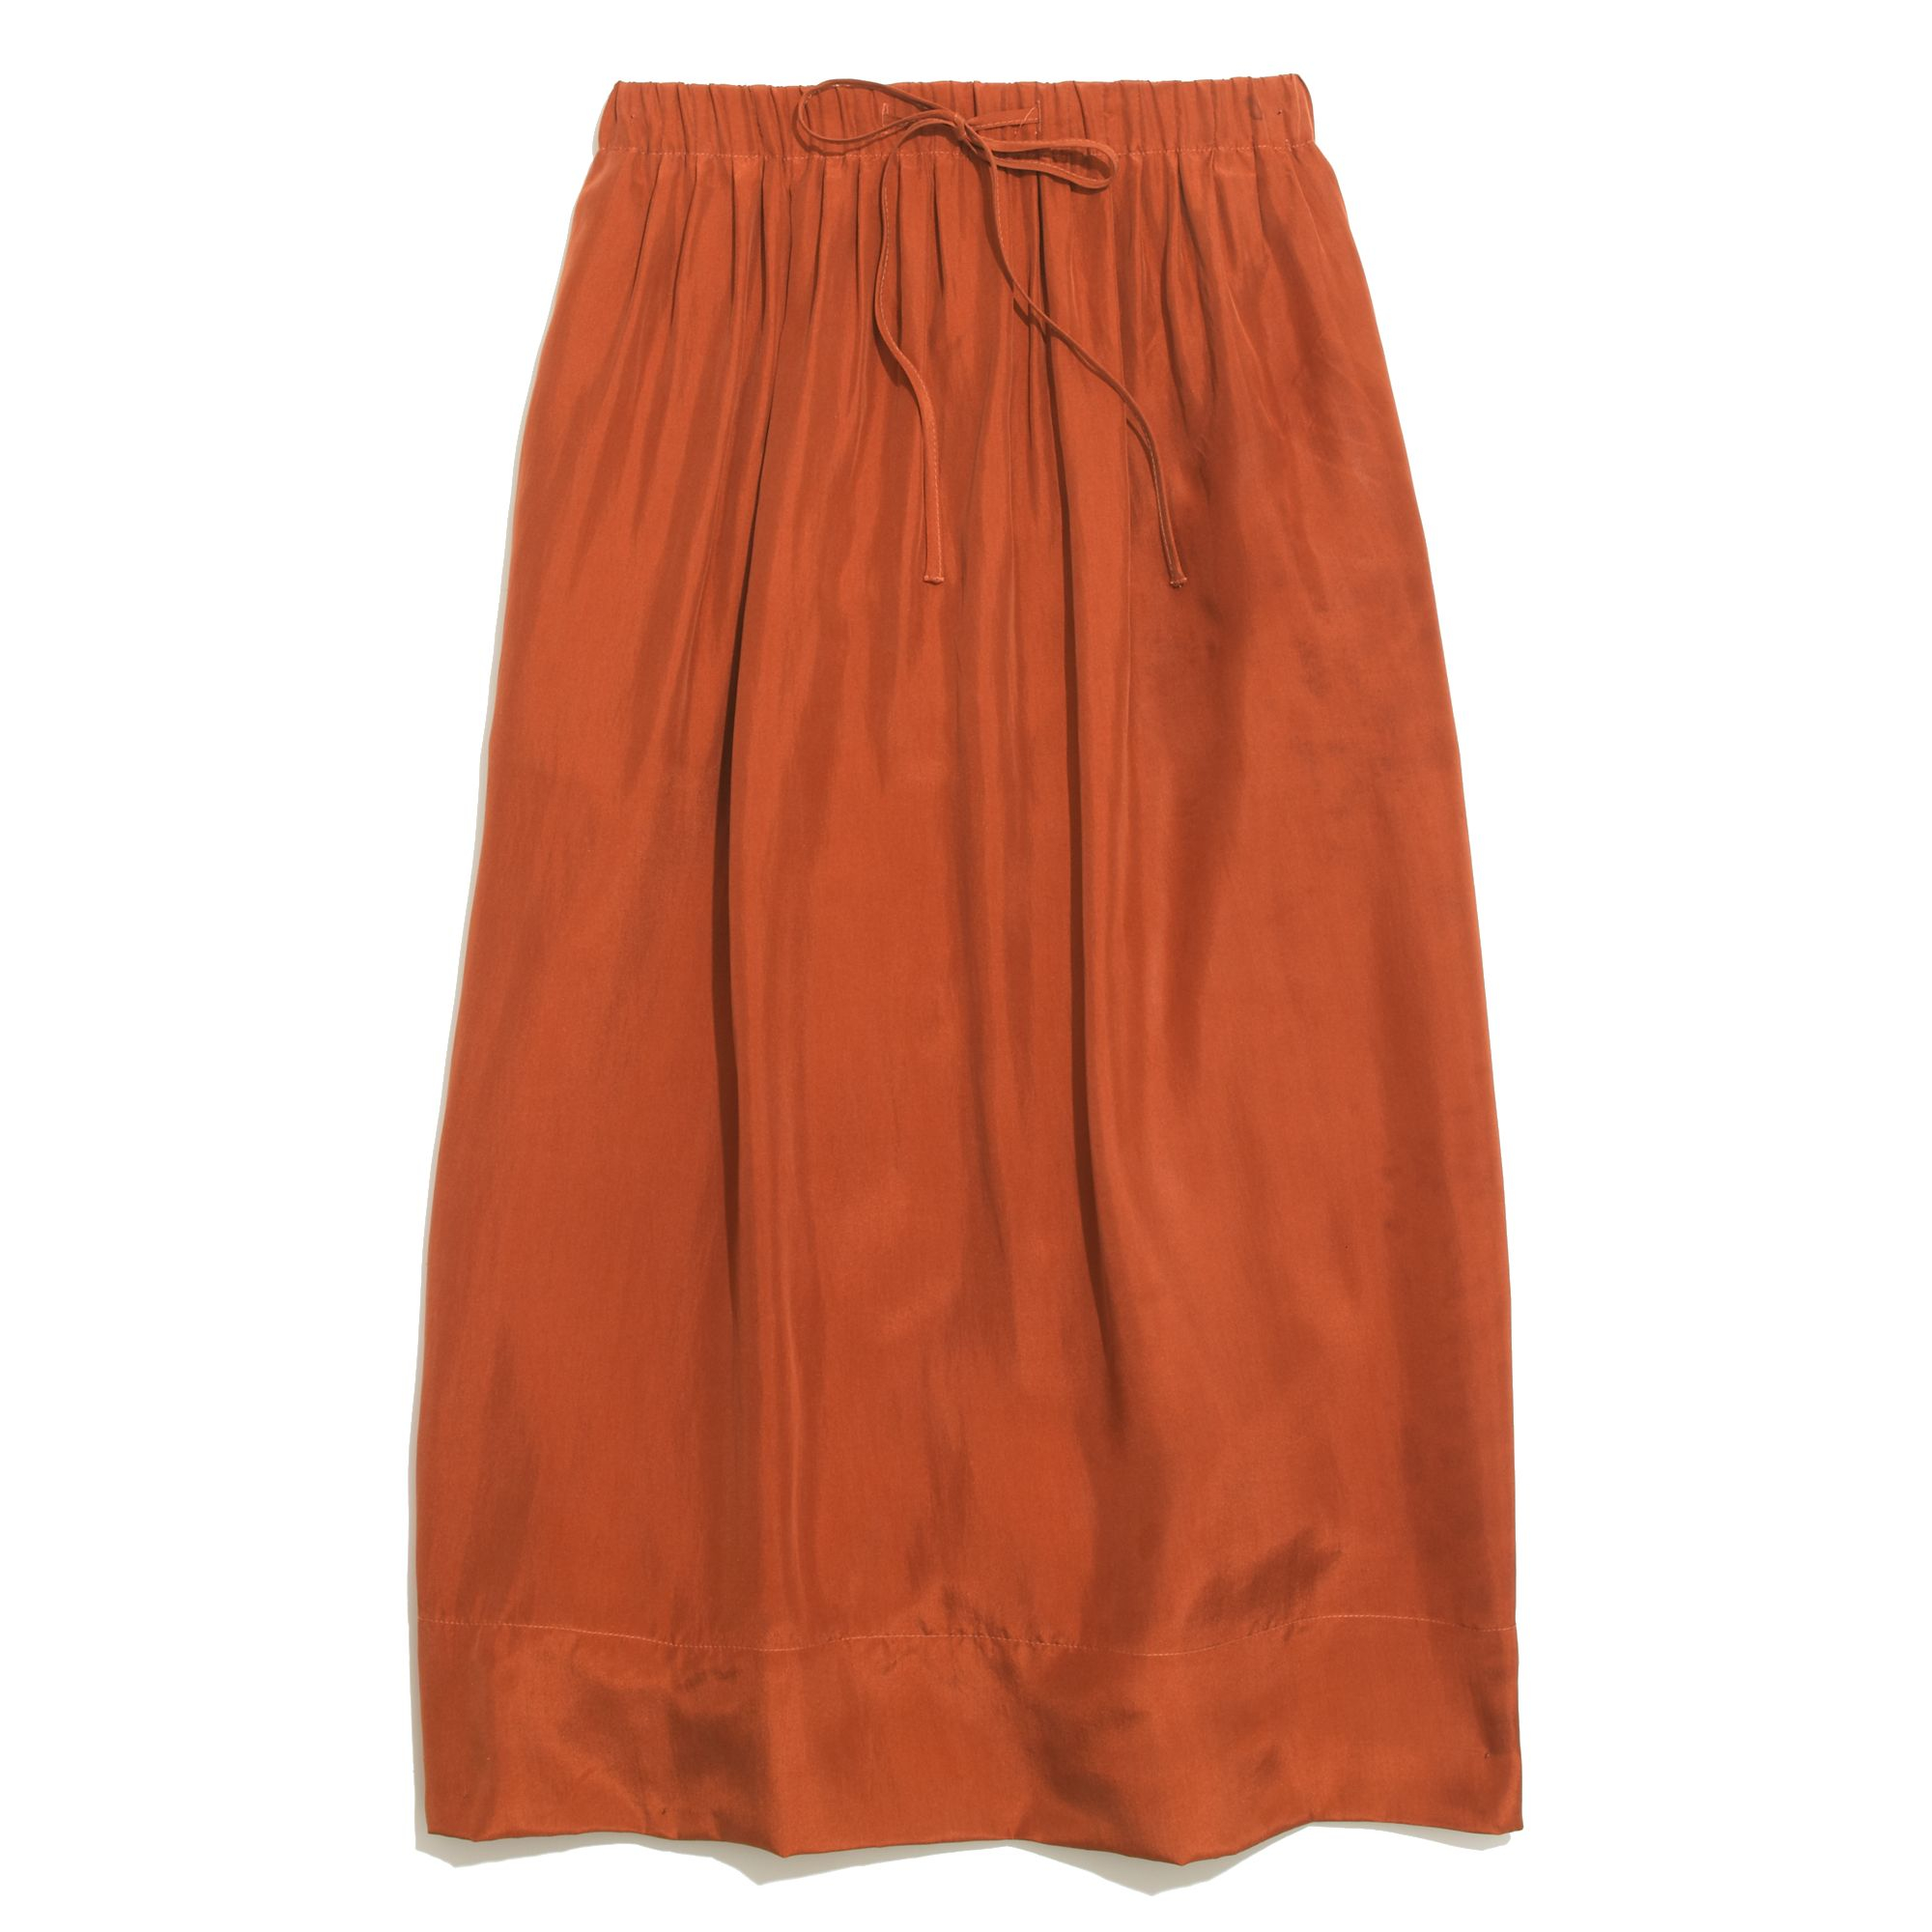 Lyst - Madewell Silk Drawstring Skirt in Orange